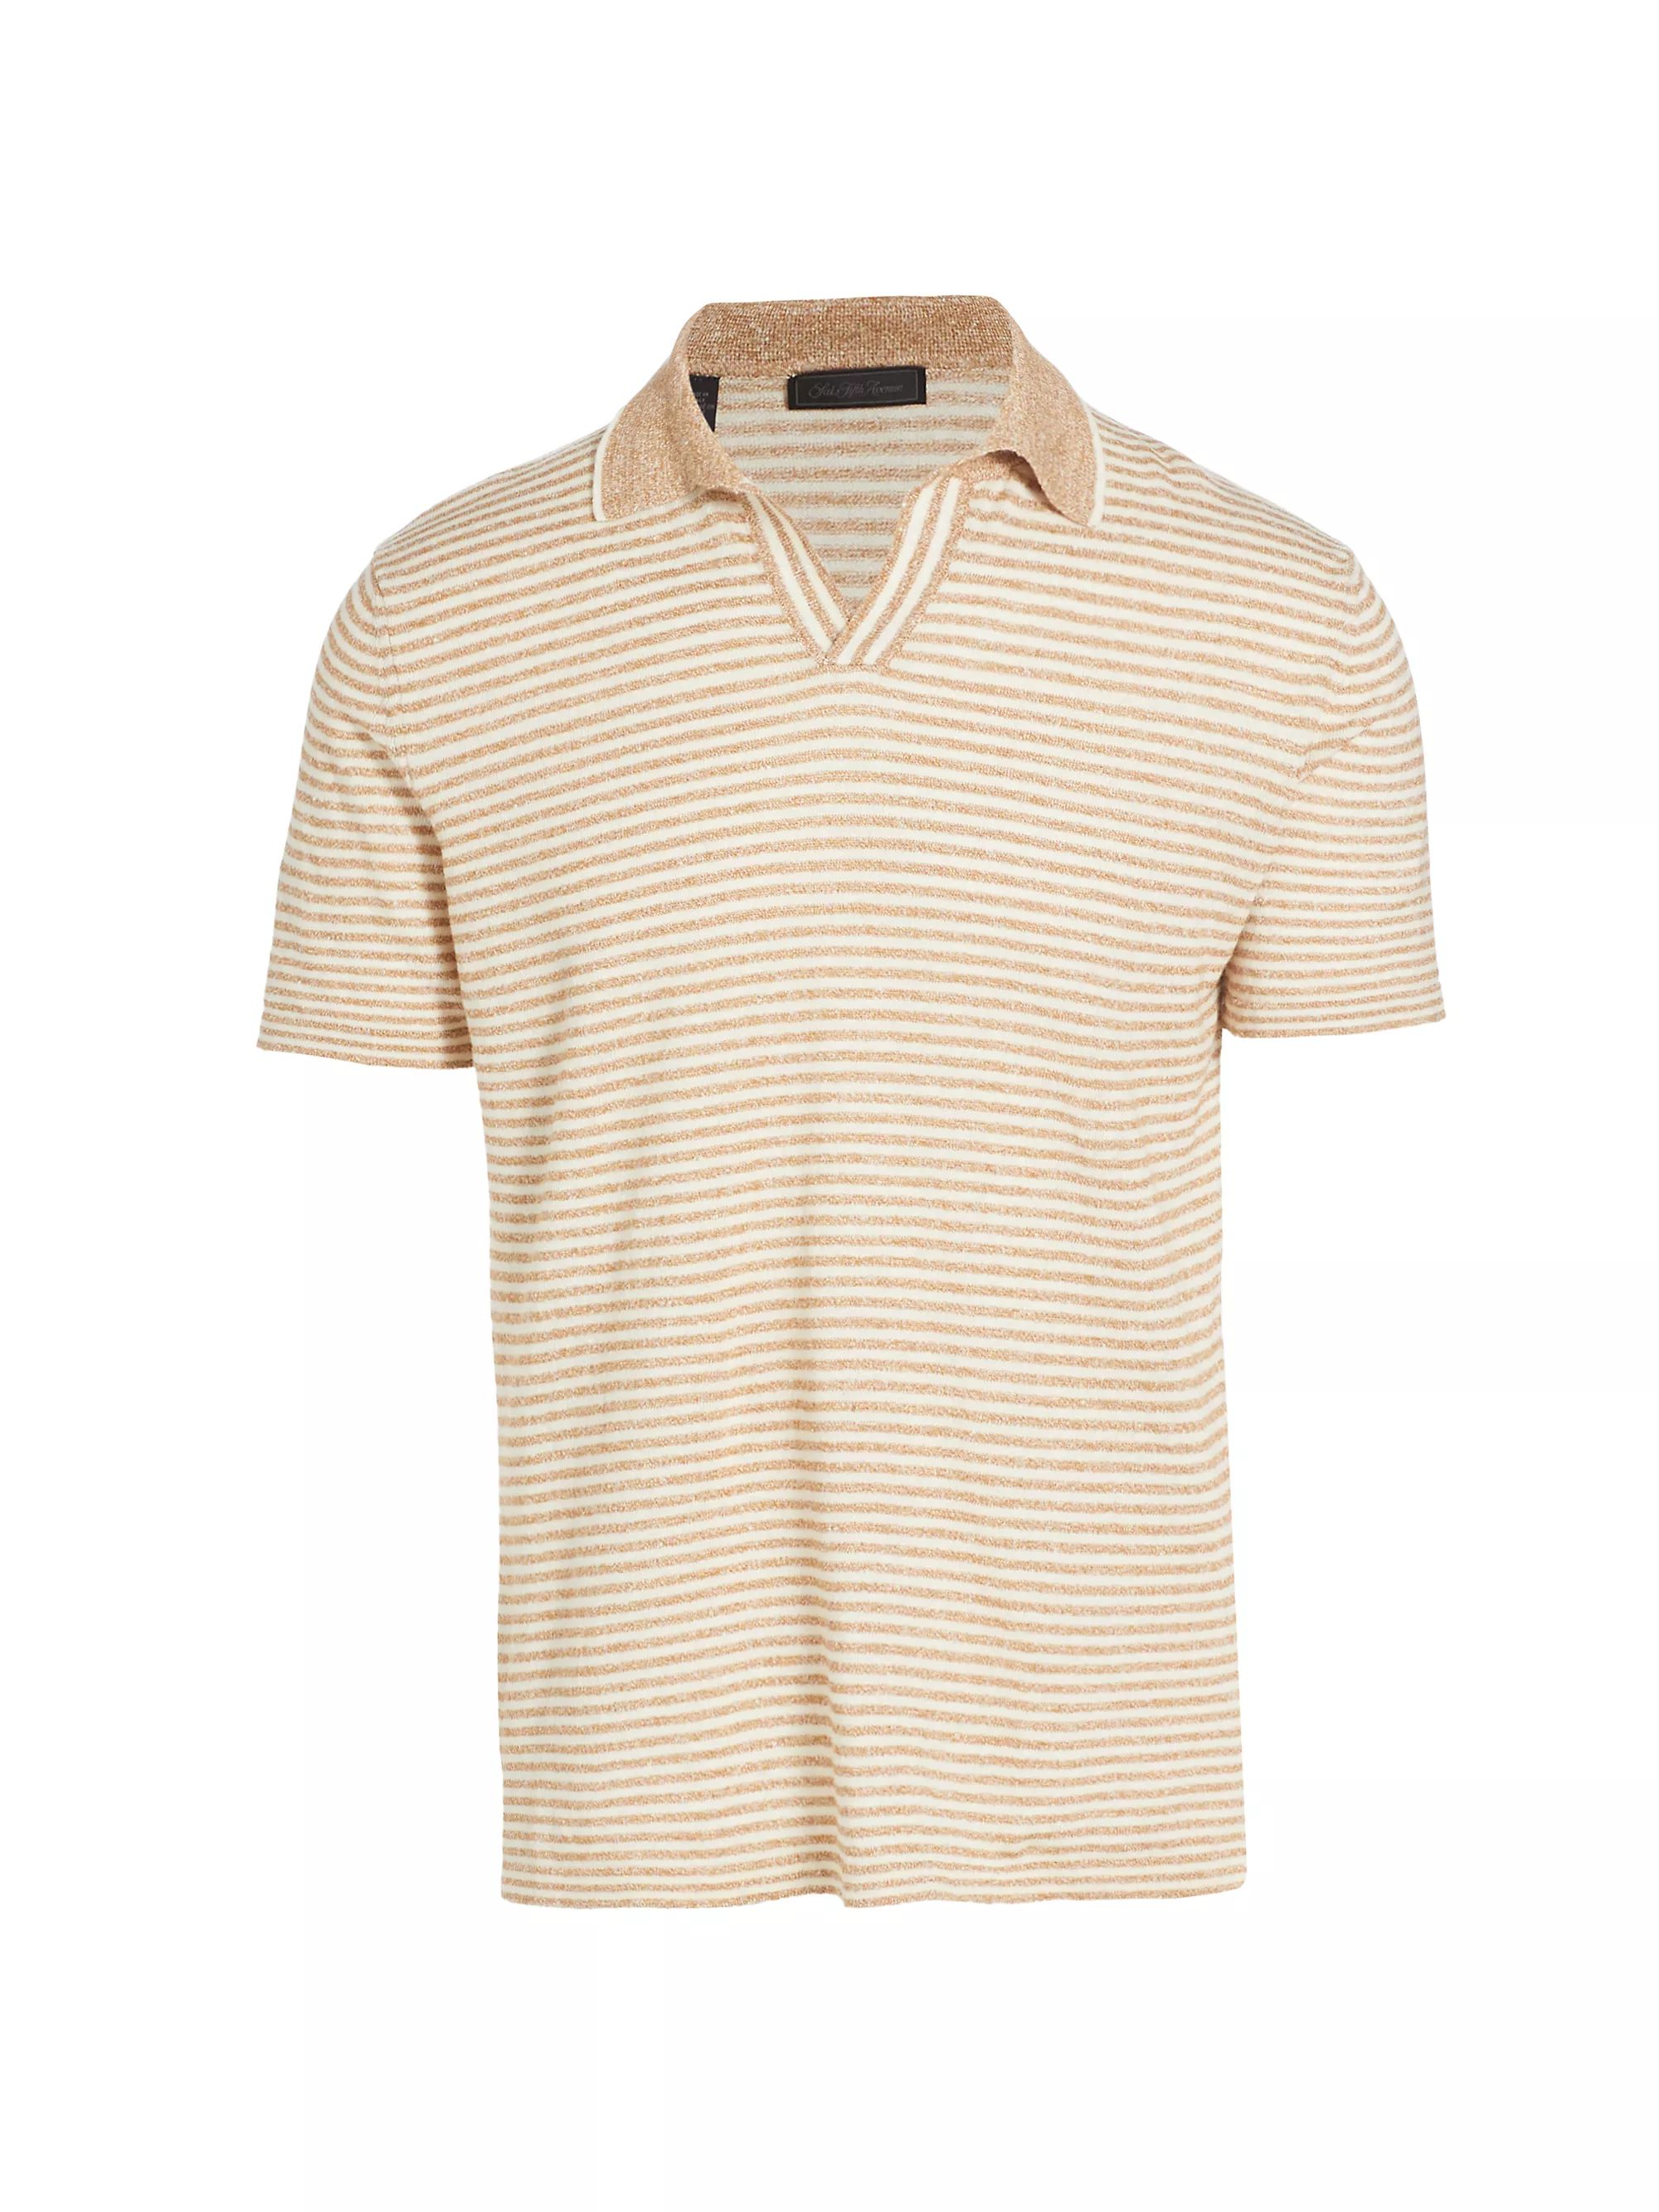 Shop Saks Fifth Avenue COLLECTION Beach Striped Linen &amp; Cotton Knit Polo Shirt | Saks Fifth A... | Saks Fifth Avenue